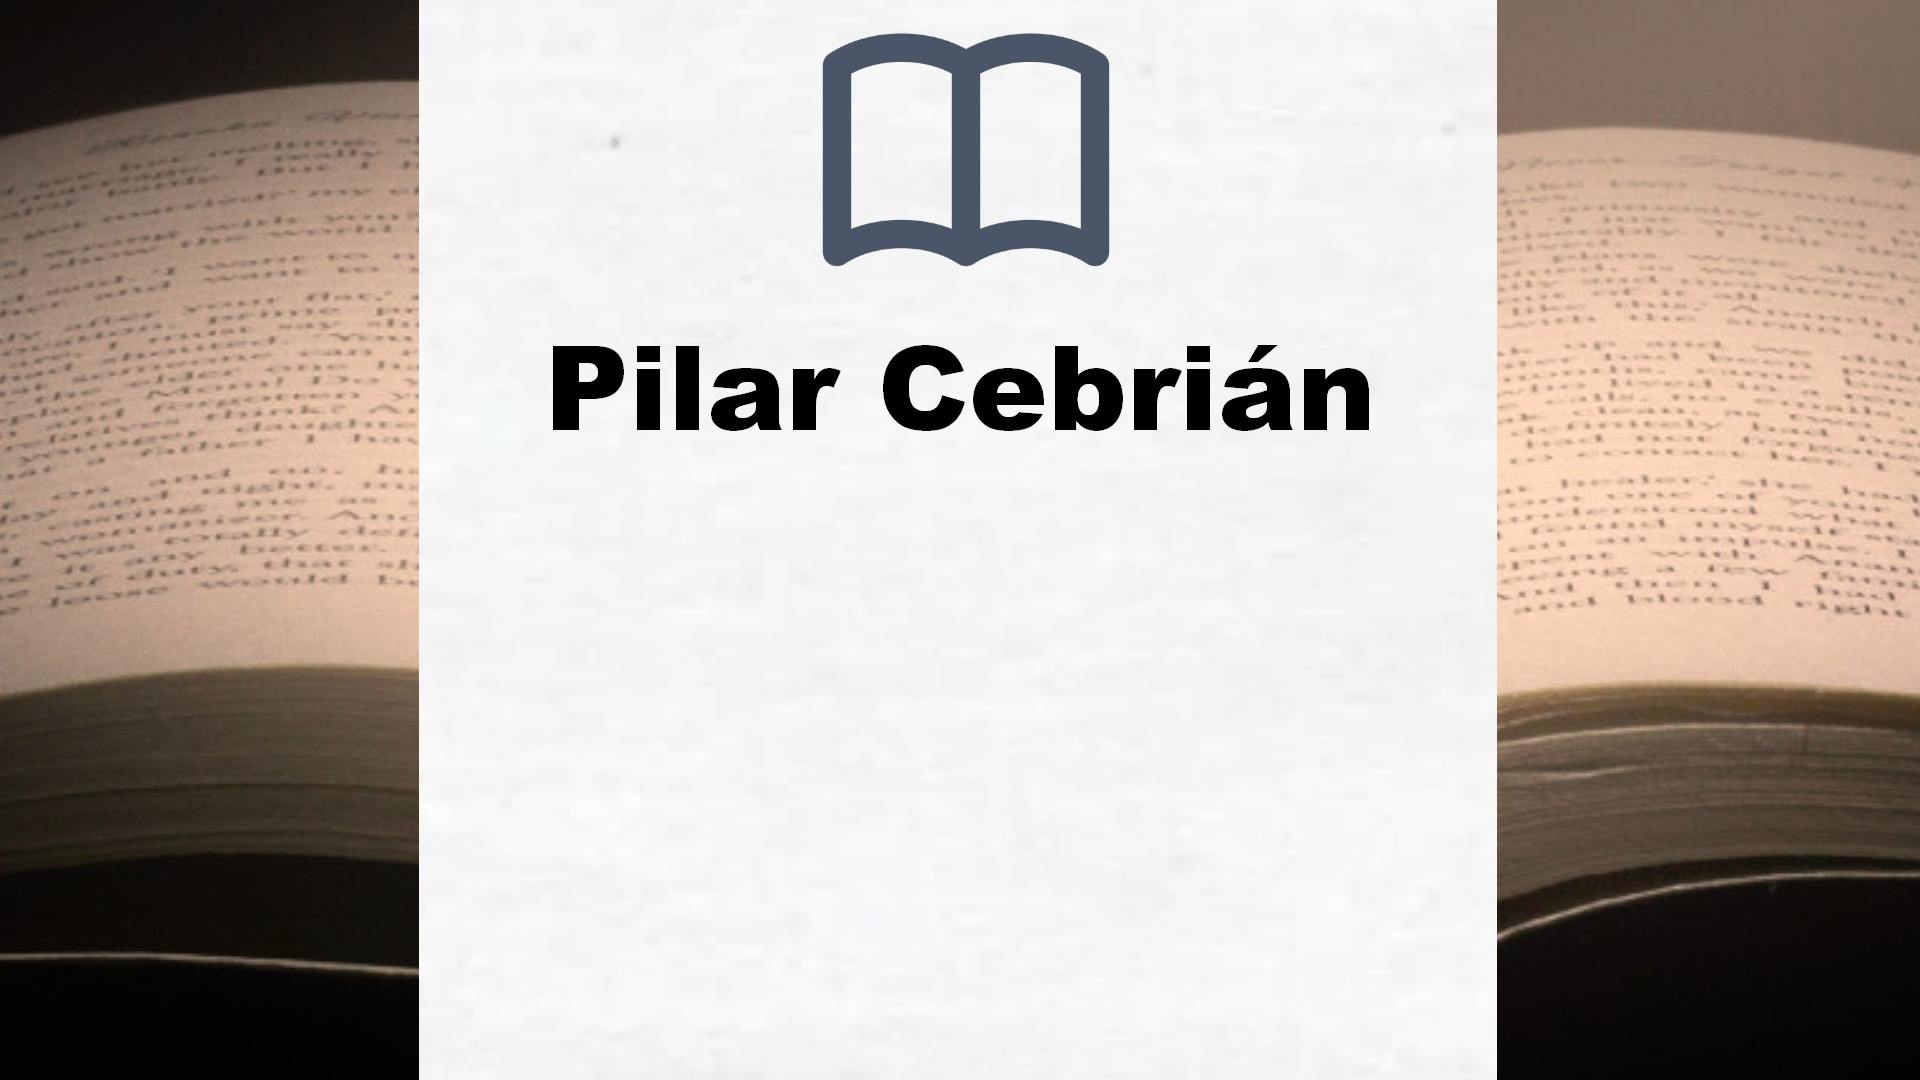 Libros Pilar Cebrián